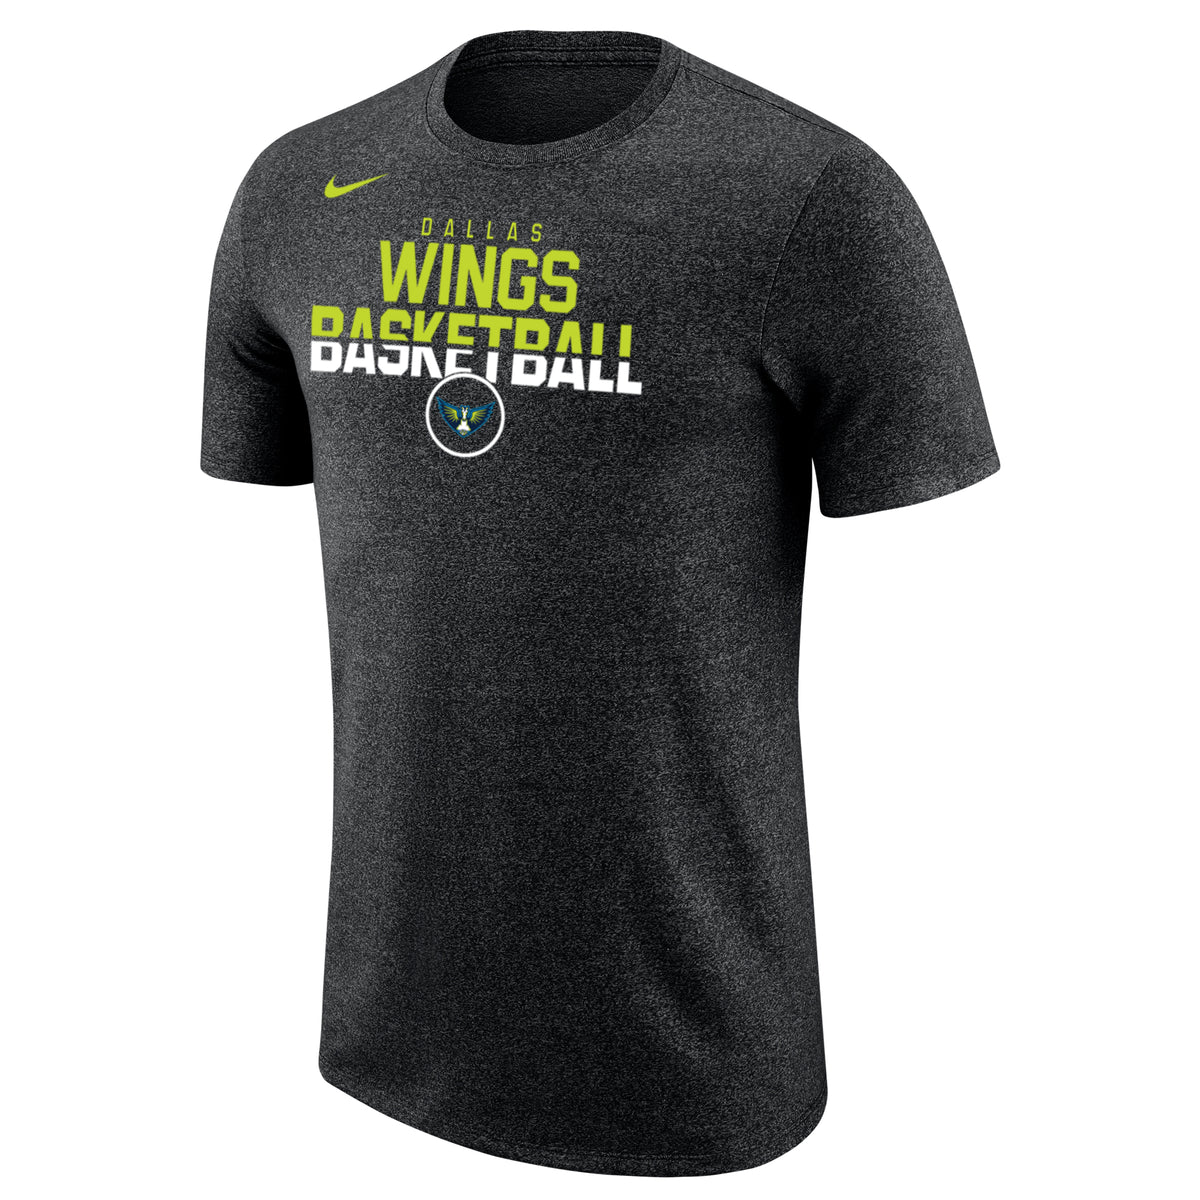 Nike Wings Basketball Marled T-Shirt